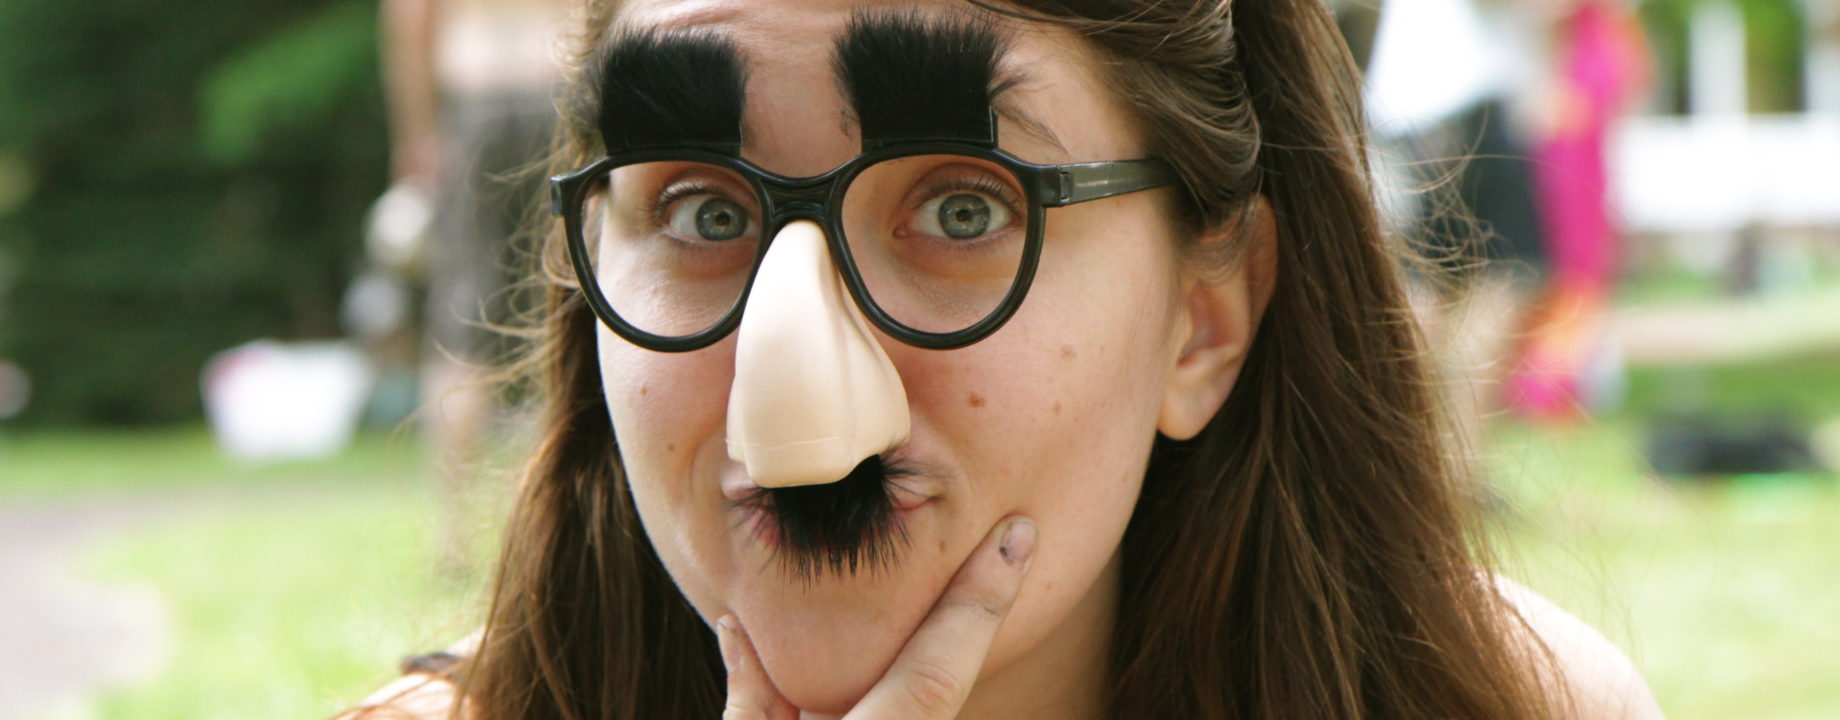 Woman wearing Groucho Marx glasses